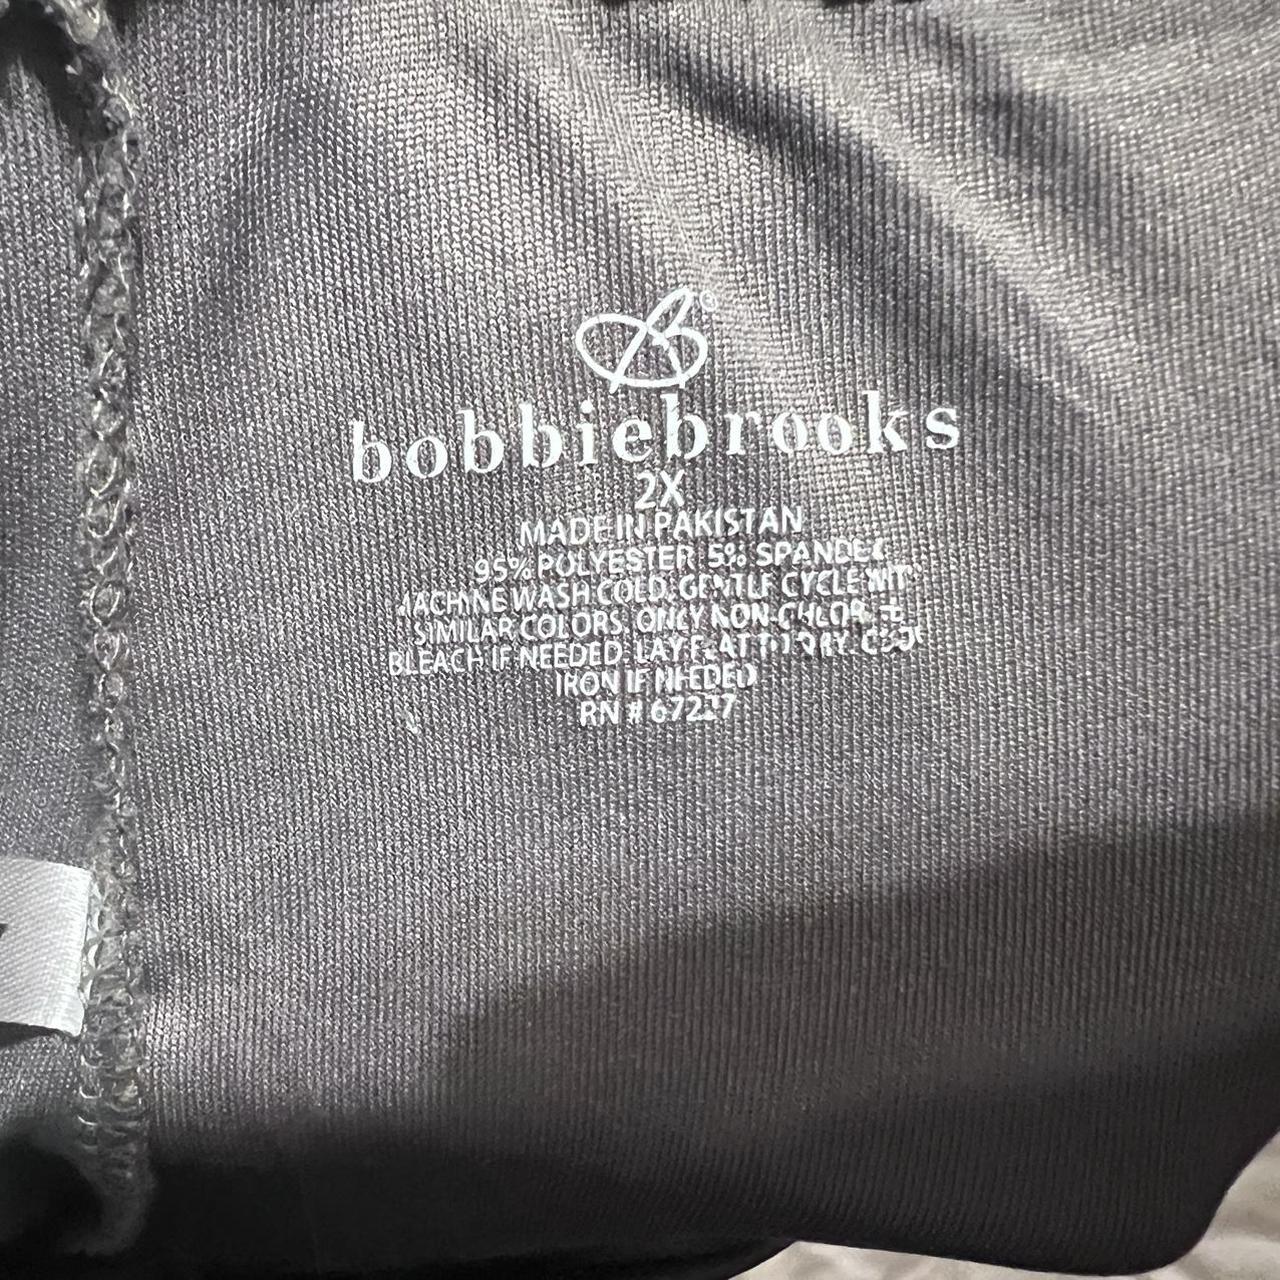 Bobbie Brooks Grey/Silver Yoga Flare Leggings Can - Depop